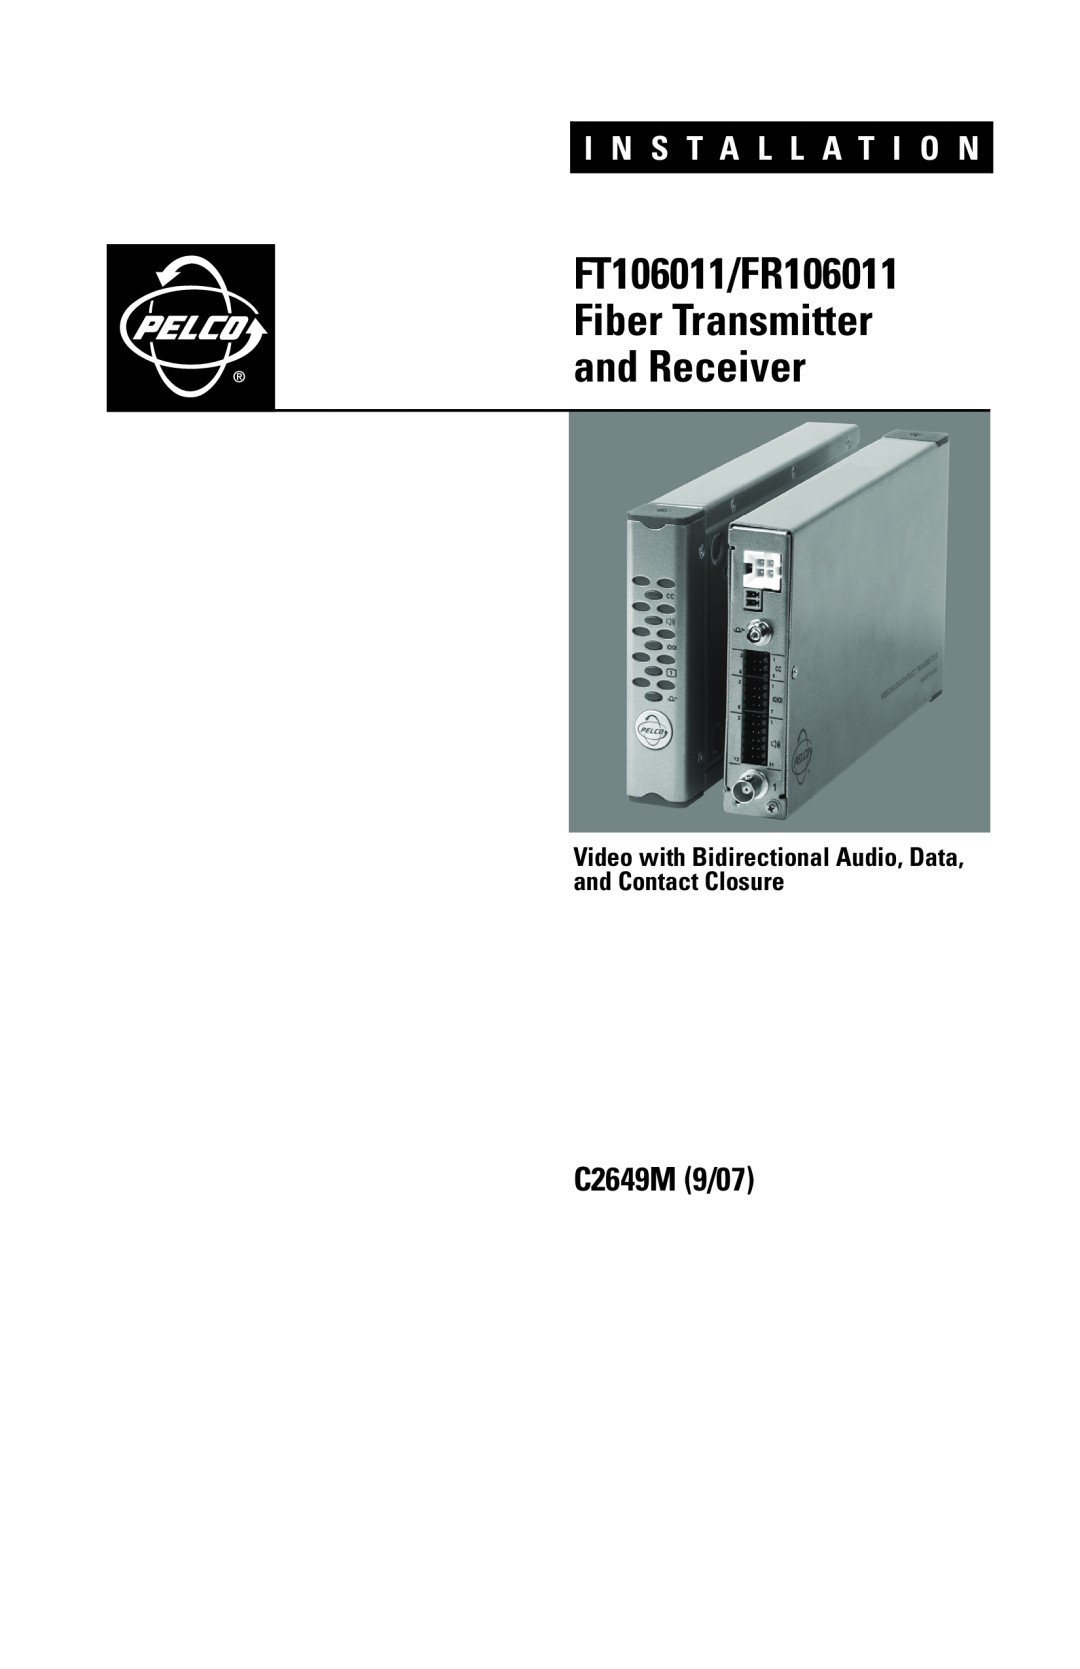 Pelco manual FT106011/FR106011 Fiber Transmitter and Receiver, C2649M 9/07, I N S T A L L A T I O N 